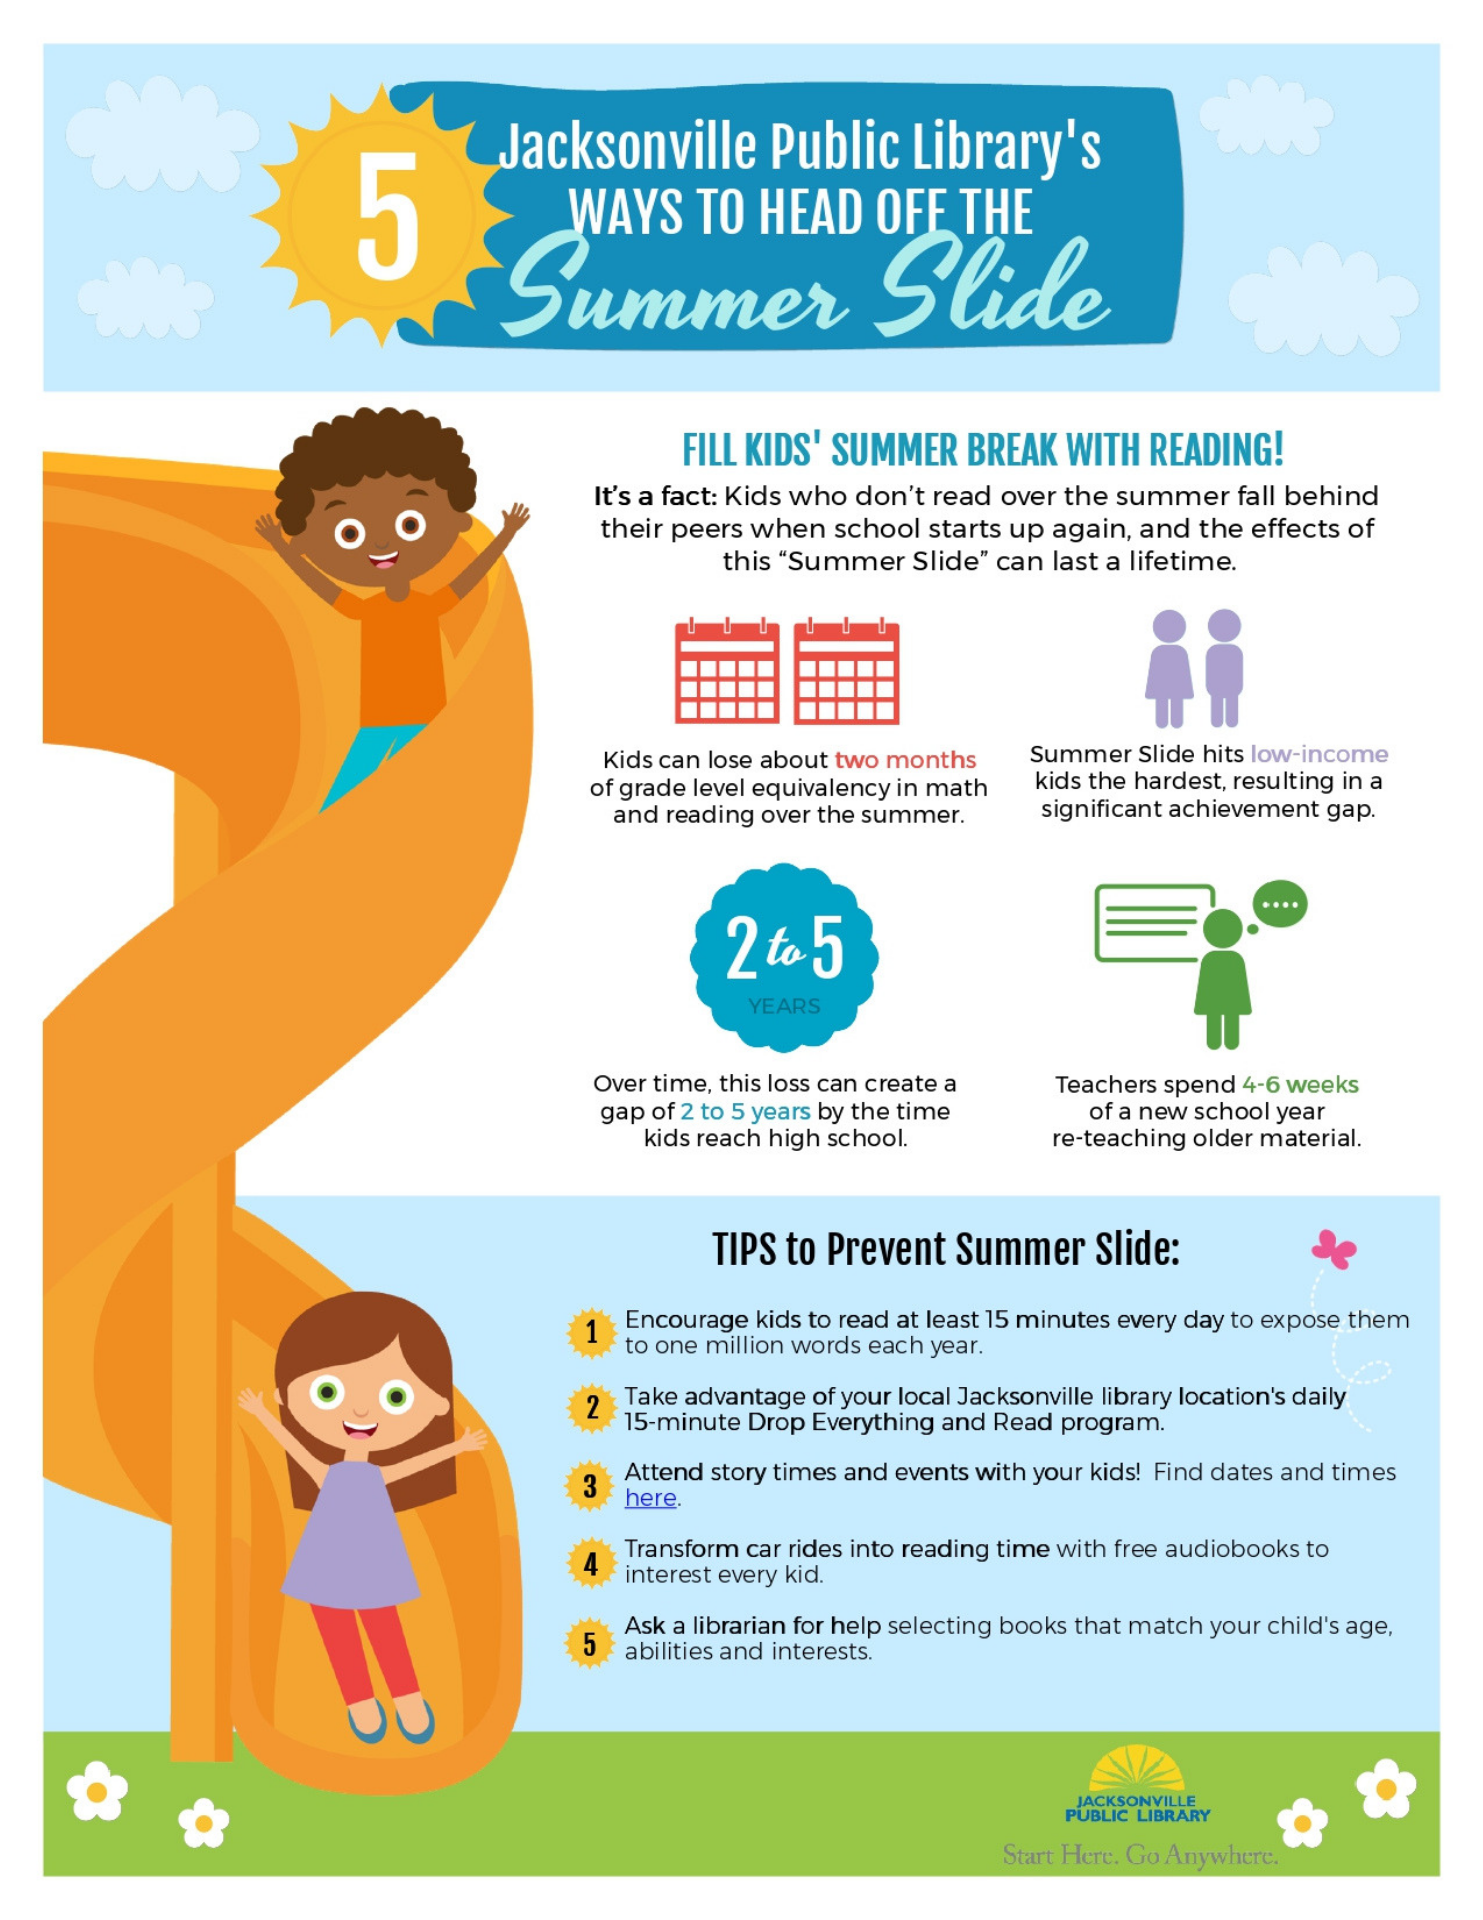 Summer slide info graphic